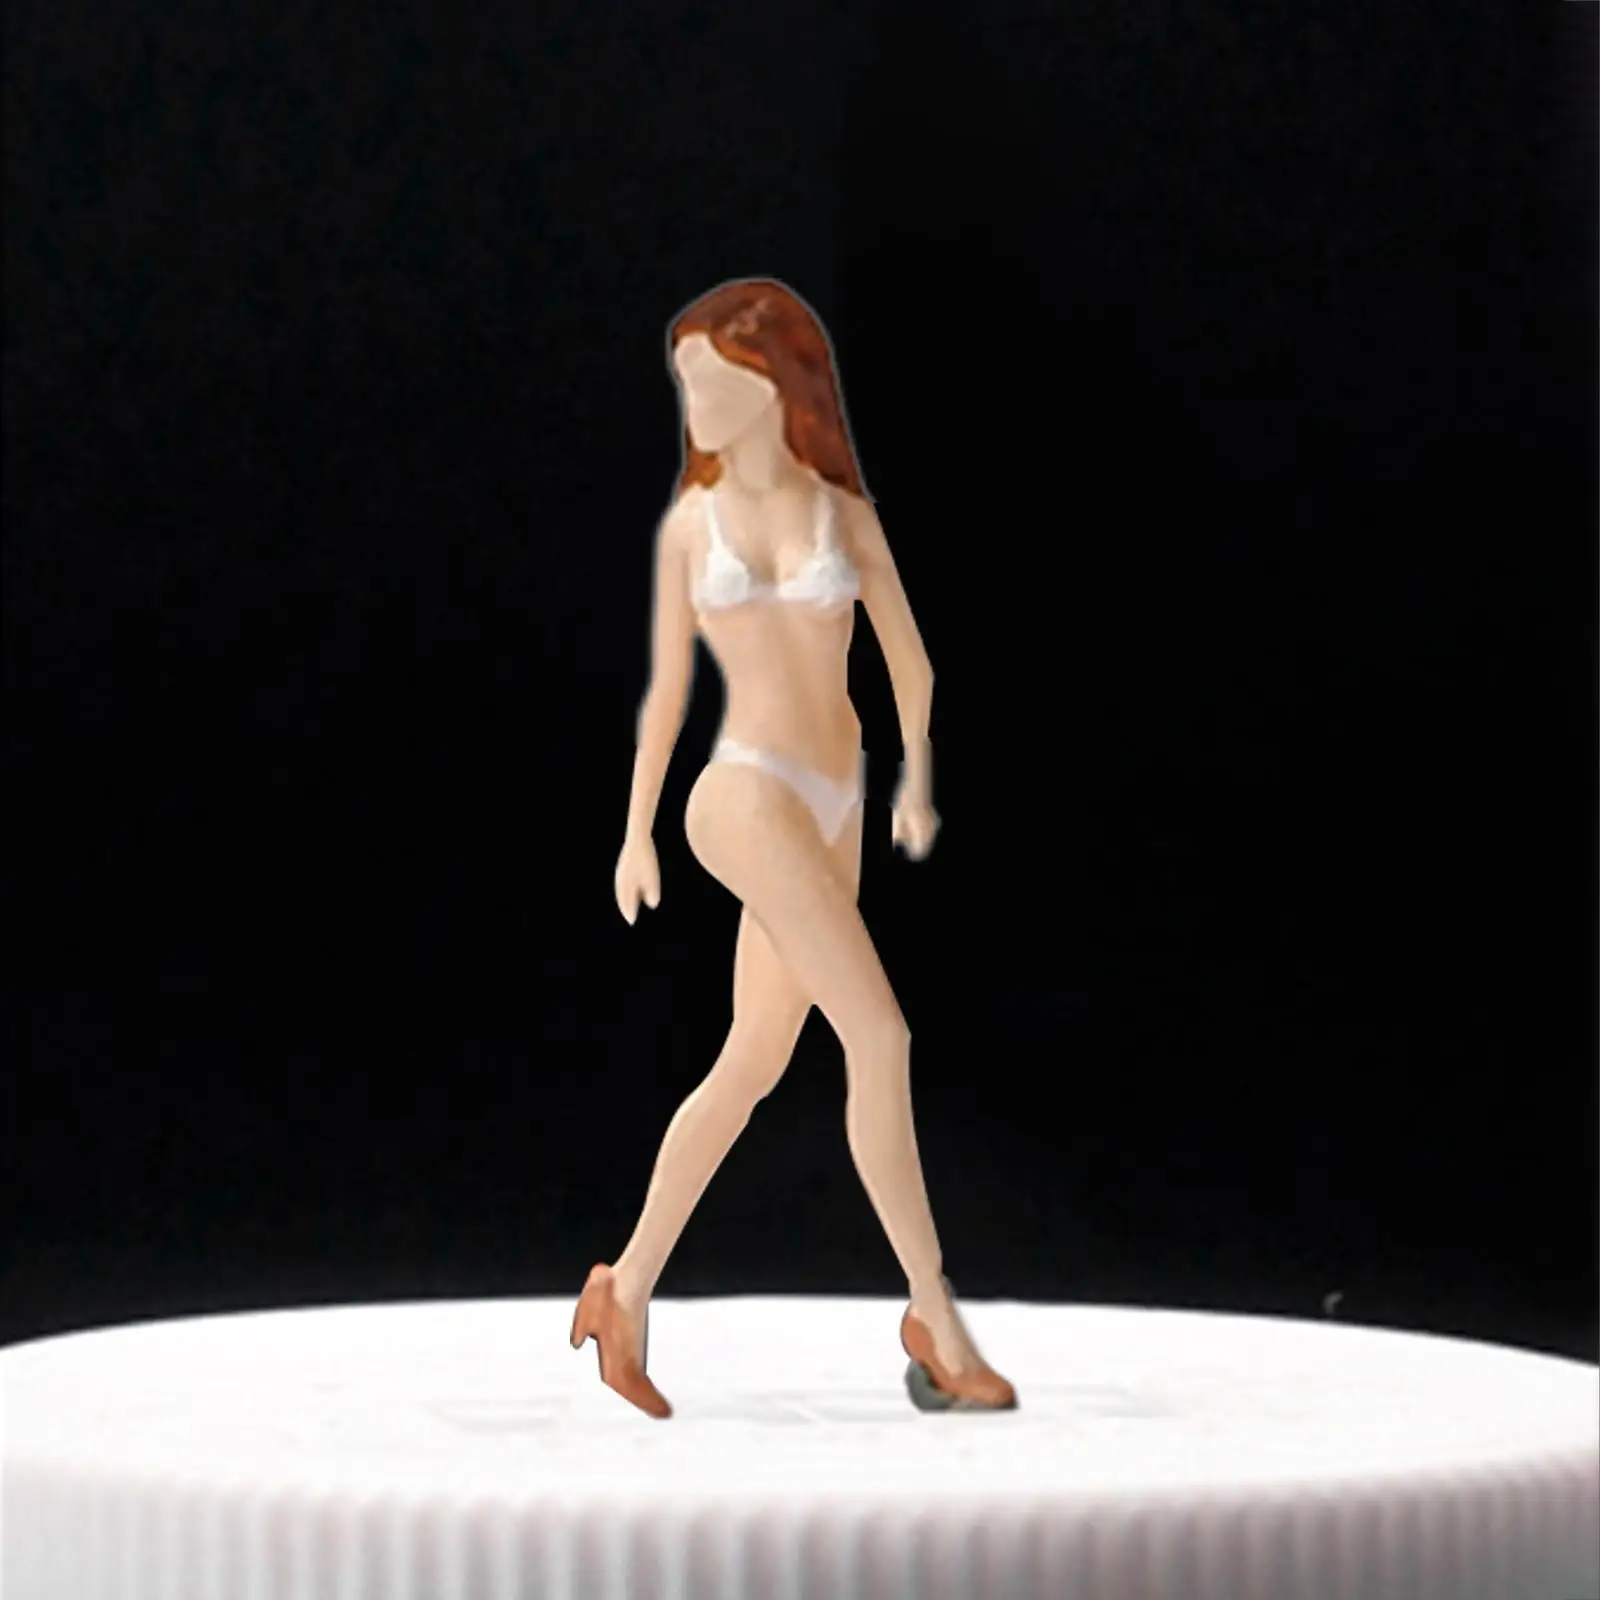 1/64 Scale Miniature Model Figures Ornament for Dollhouse Layout Decoration